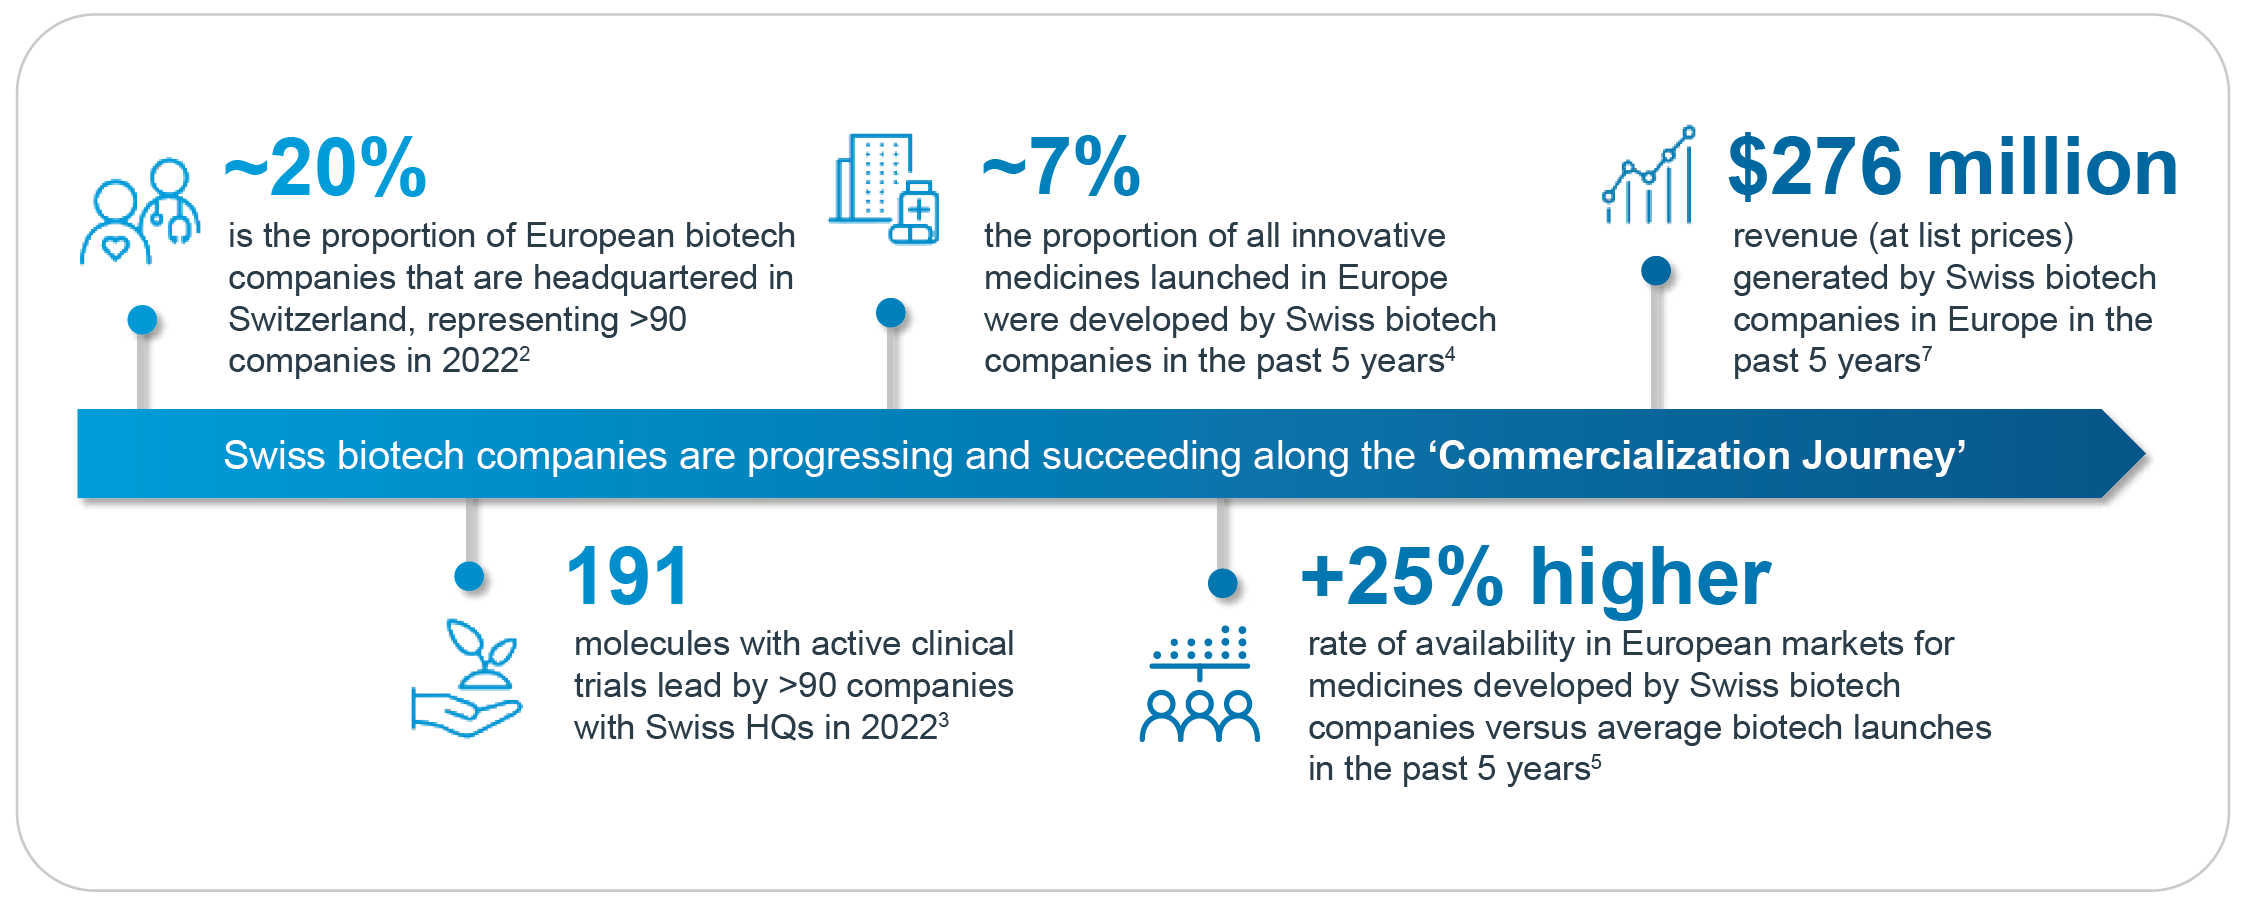 Key highlights of Swiss biotech companies